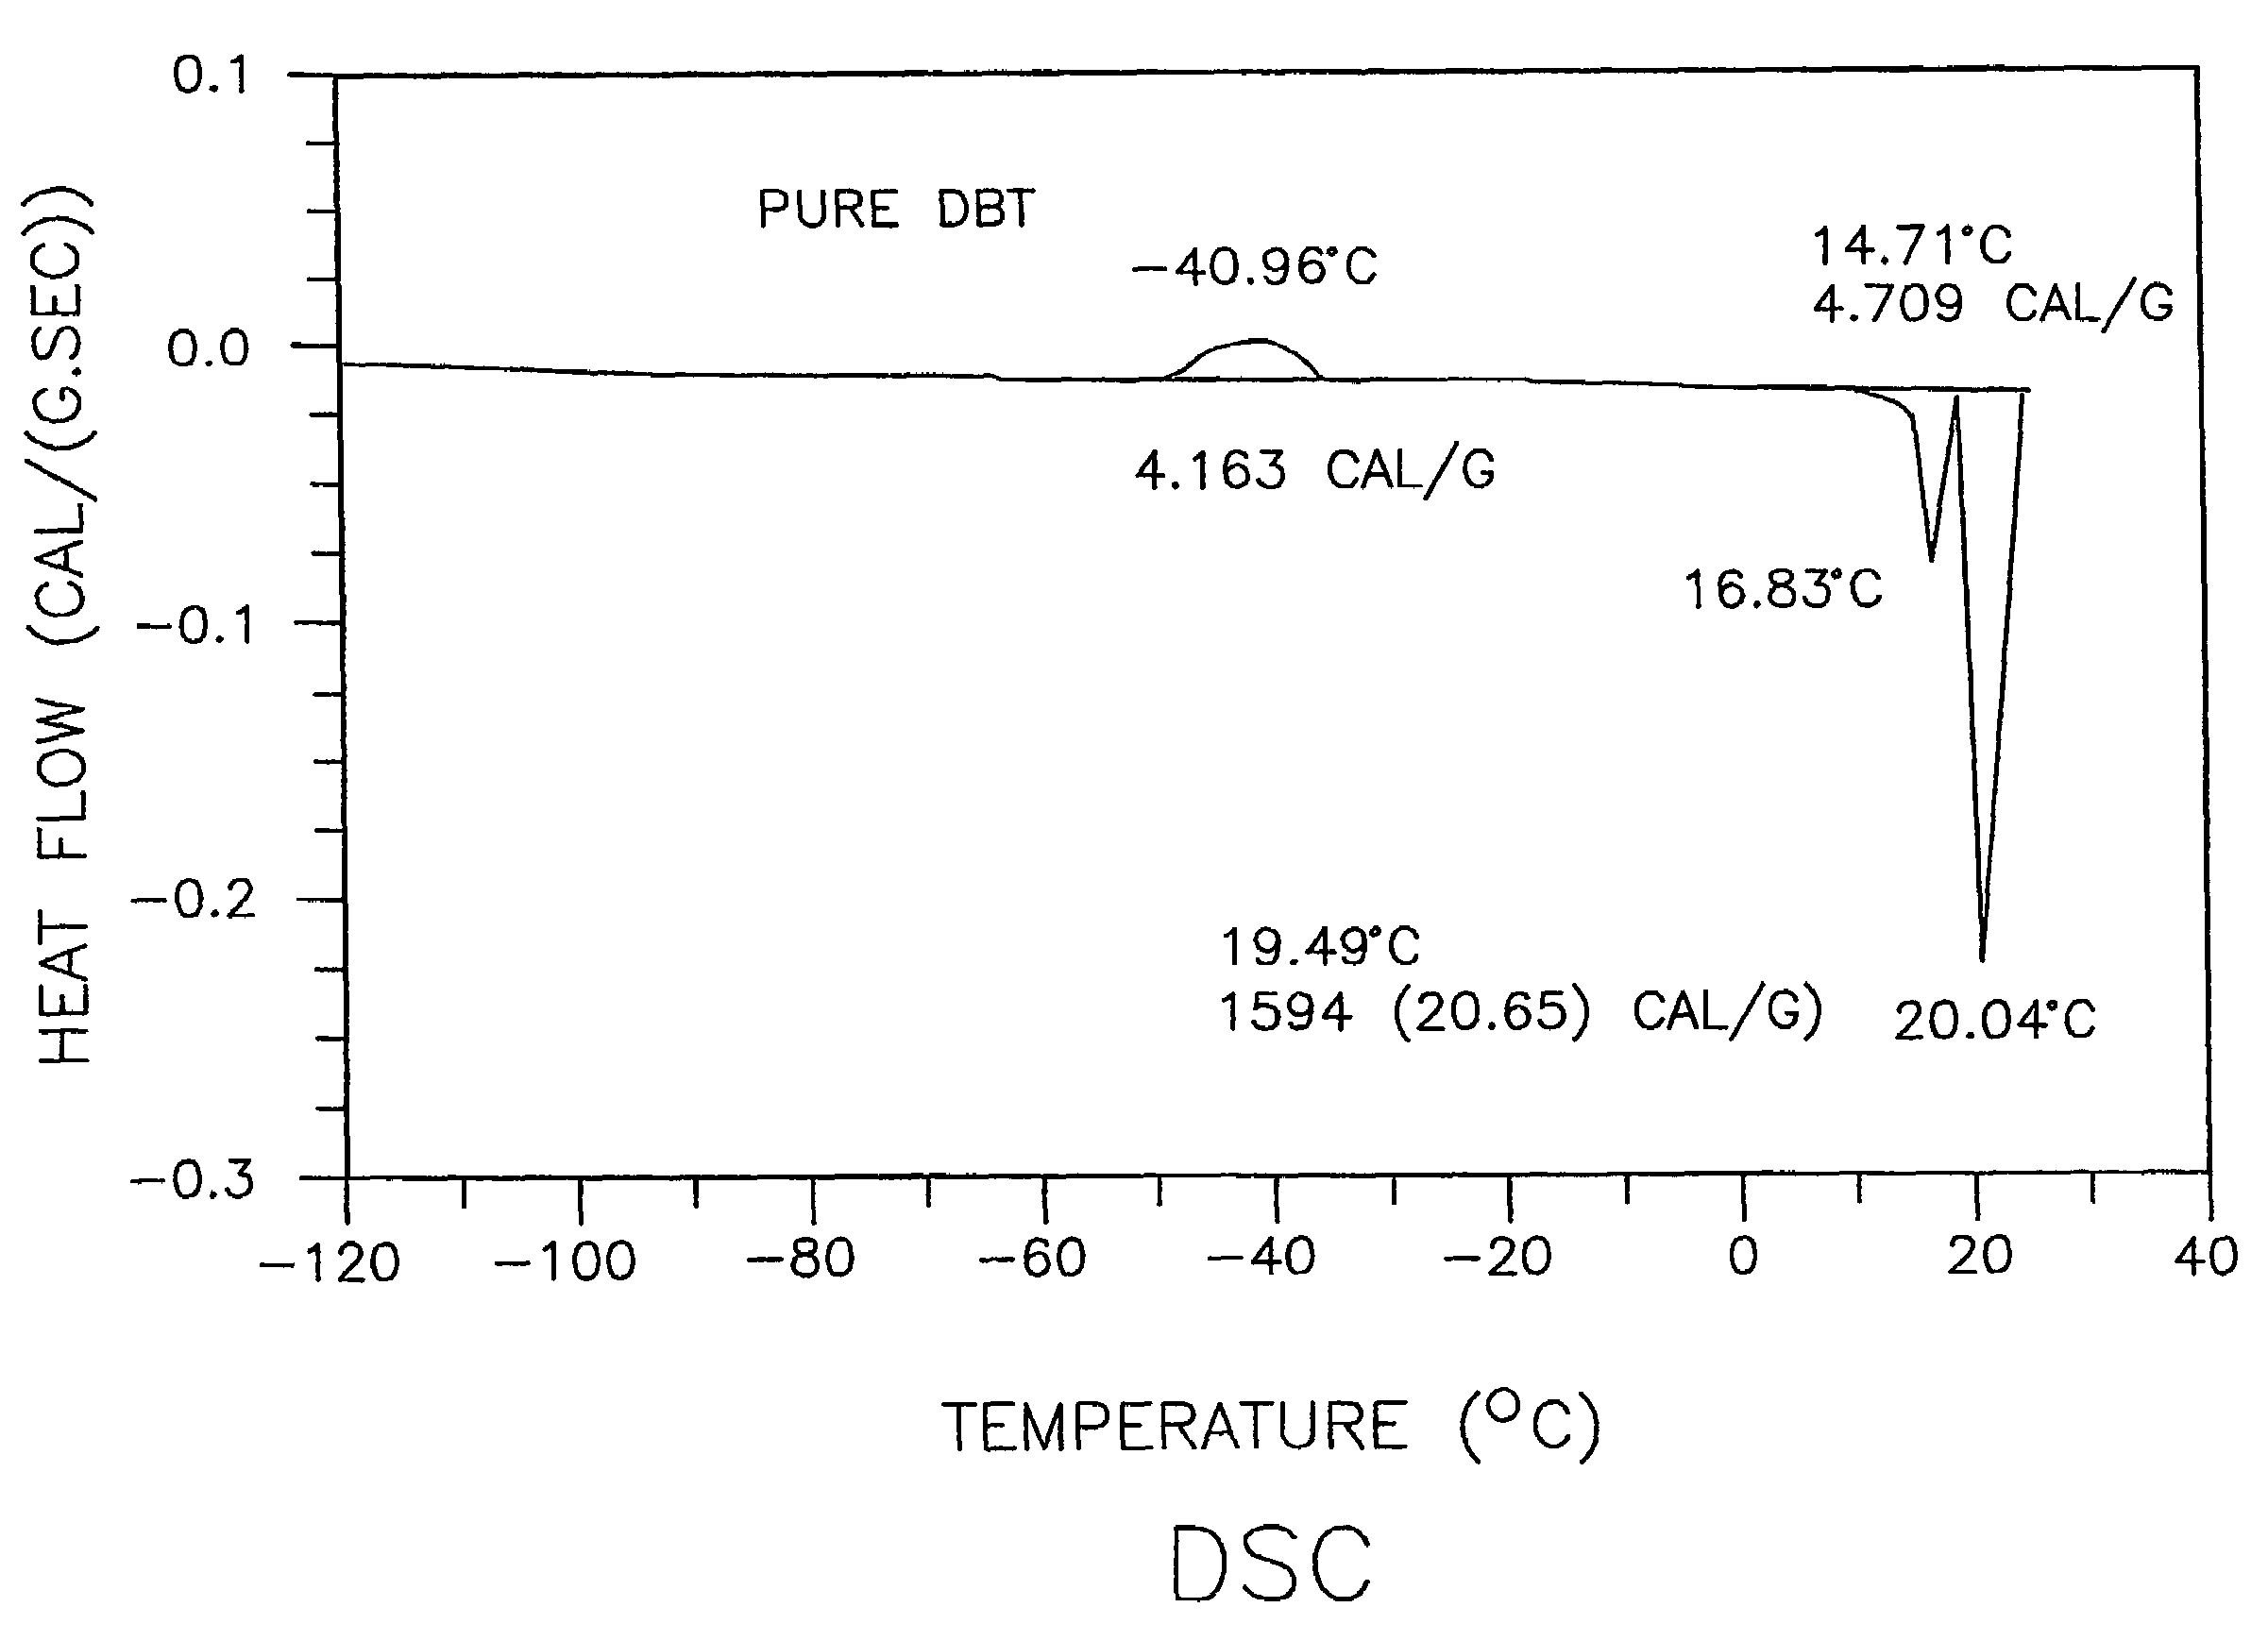 Low-melting mixtures of di-n-butyl and diisobutyl terephthalate